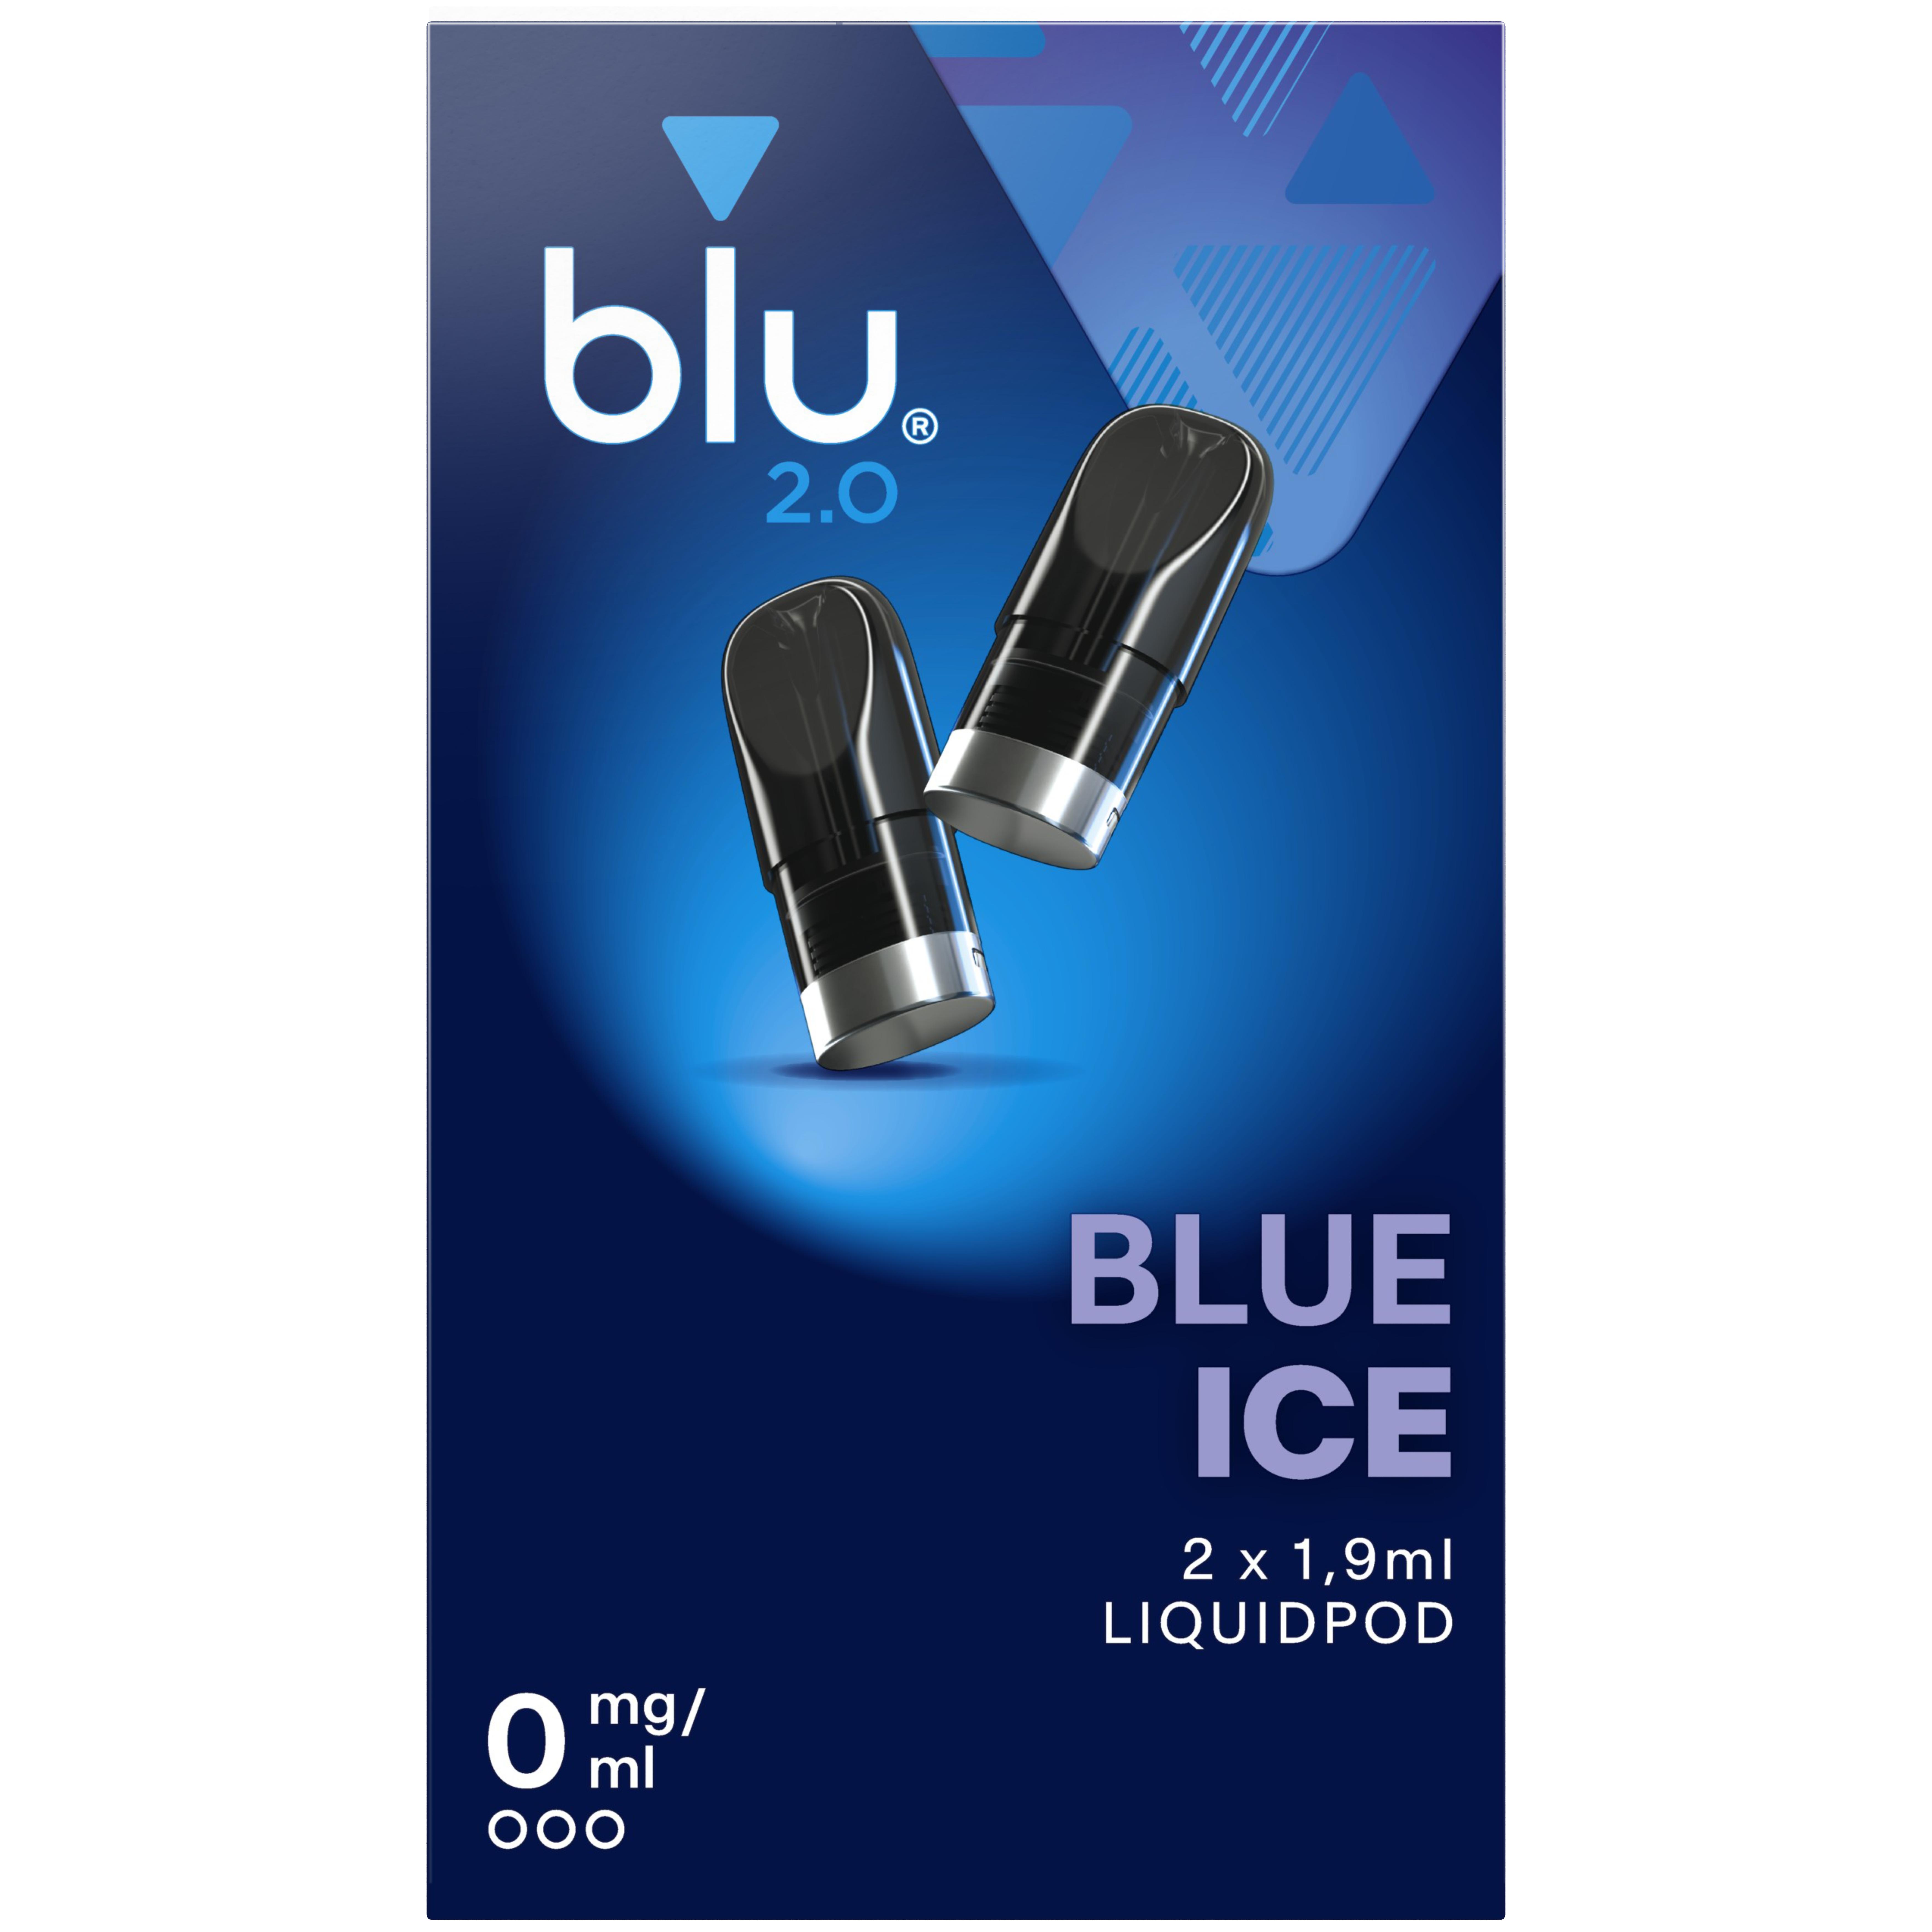 blu 2.0 Liquipod Blue Ice nikotinfrei 1 Packung